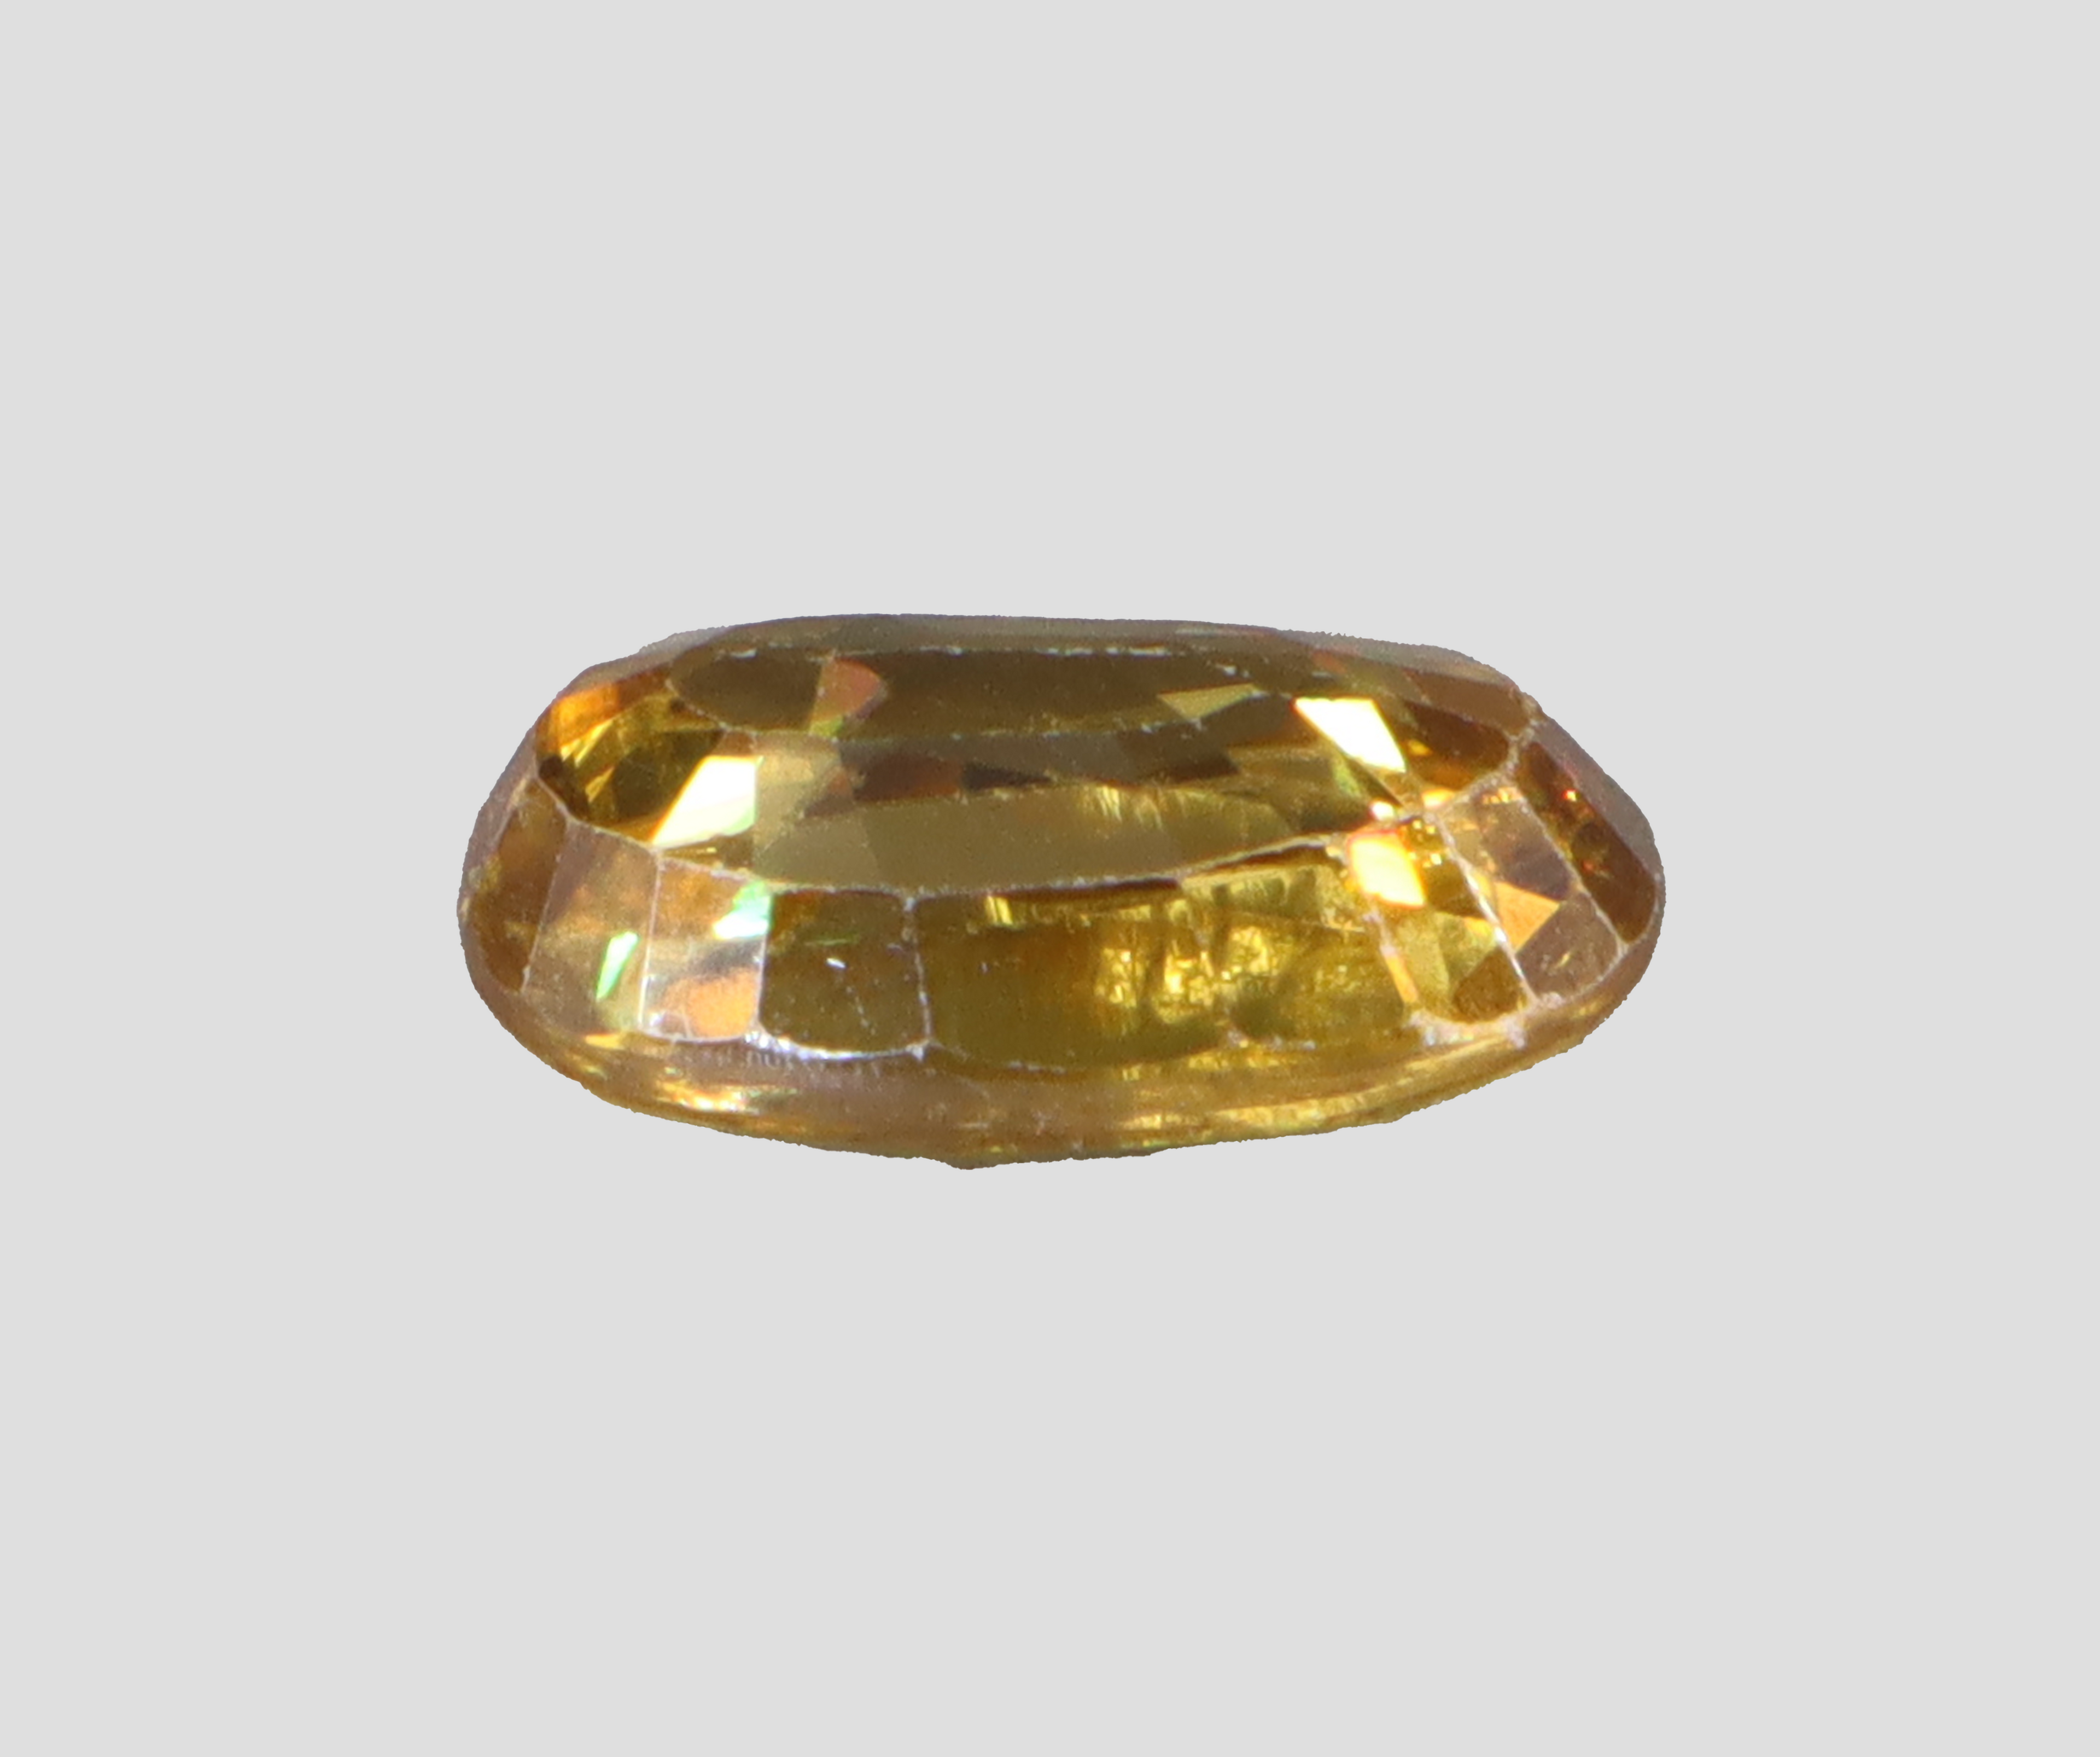 Yellow Zircon - 4.79 Carats